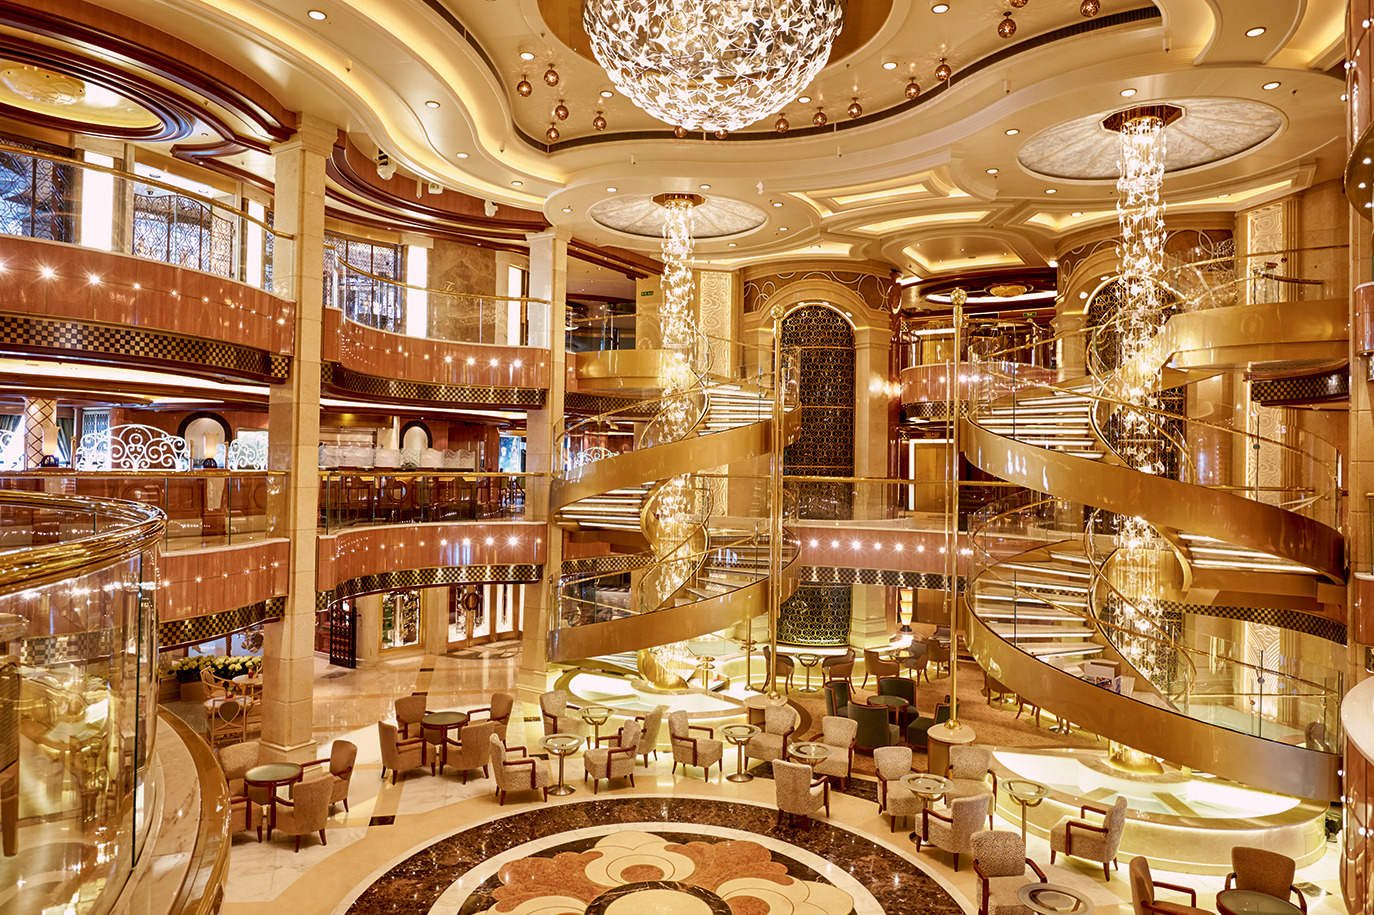 8 Coolest Cruise Ship Atriums